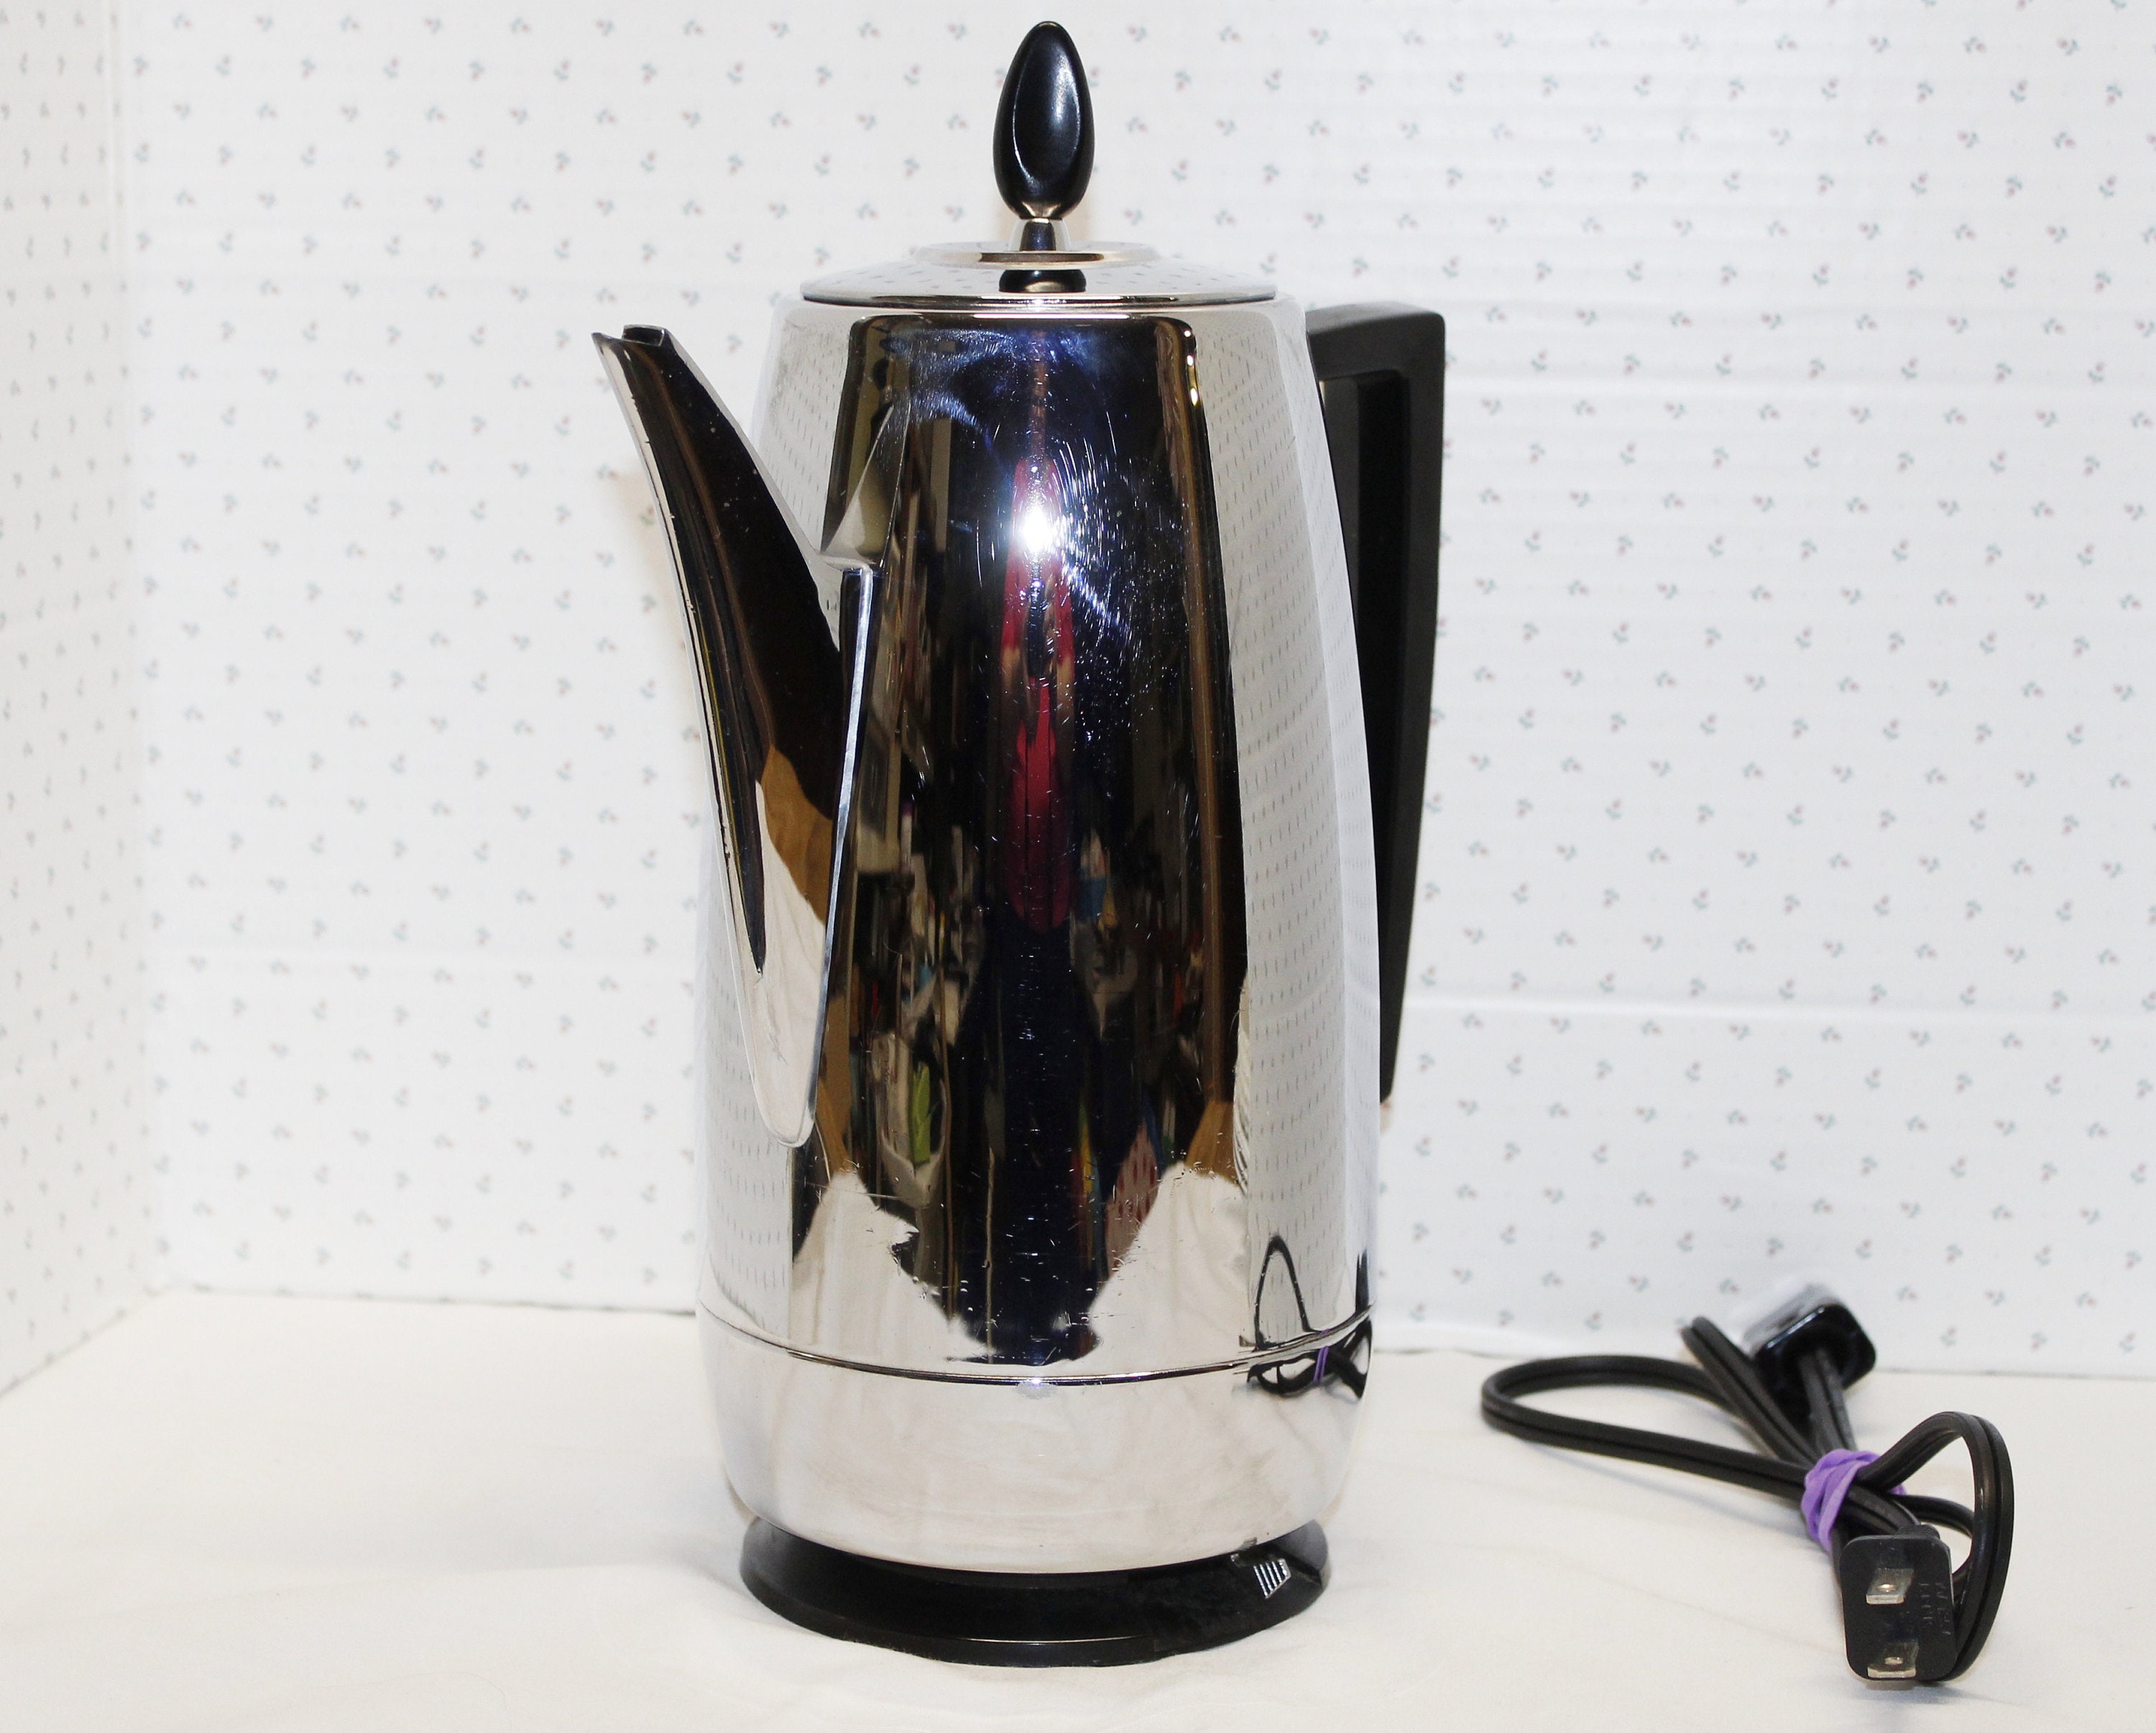 Vintage MINI Presto 6 Cup CHROME Electric Percolator Coffee Pot 0282202  WORKING